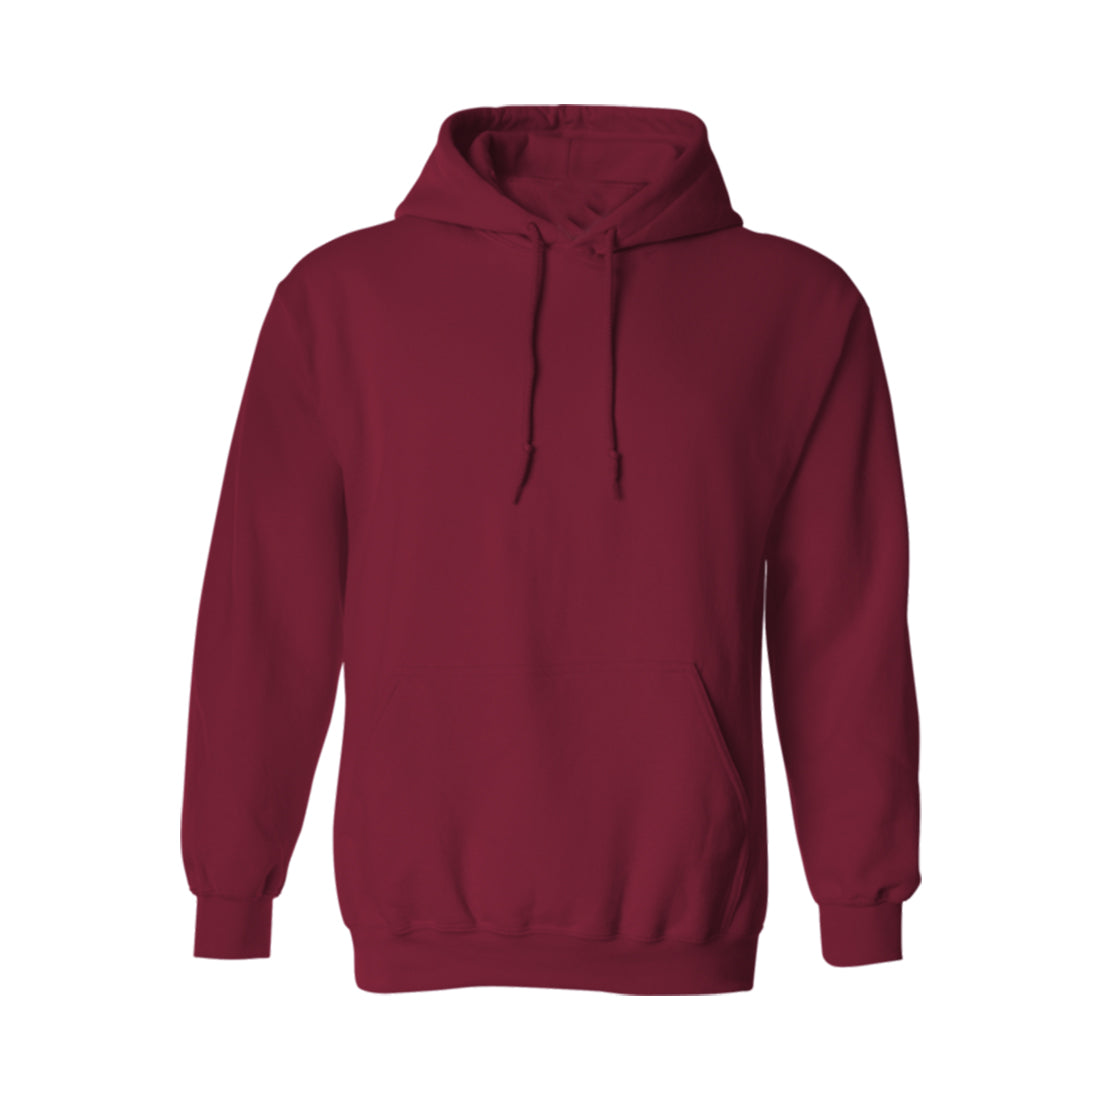 design your own hoodies in kolkata